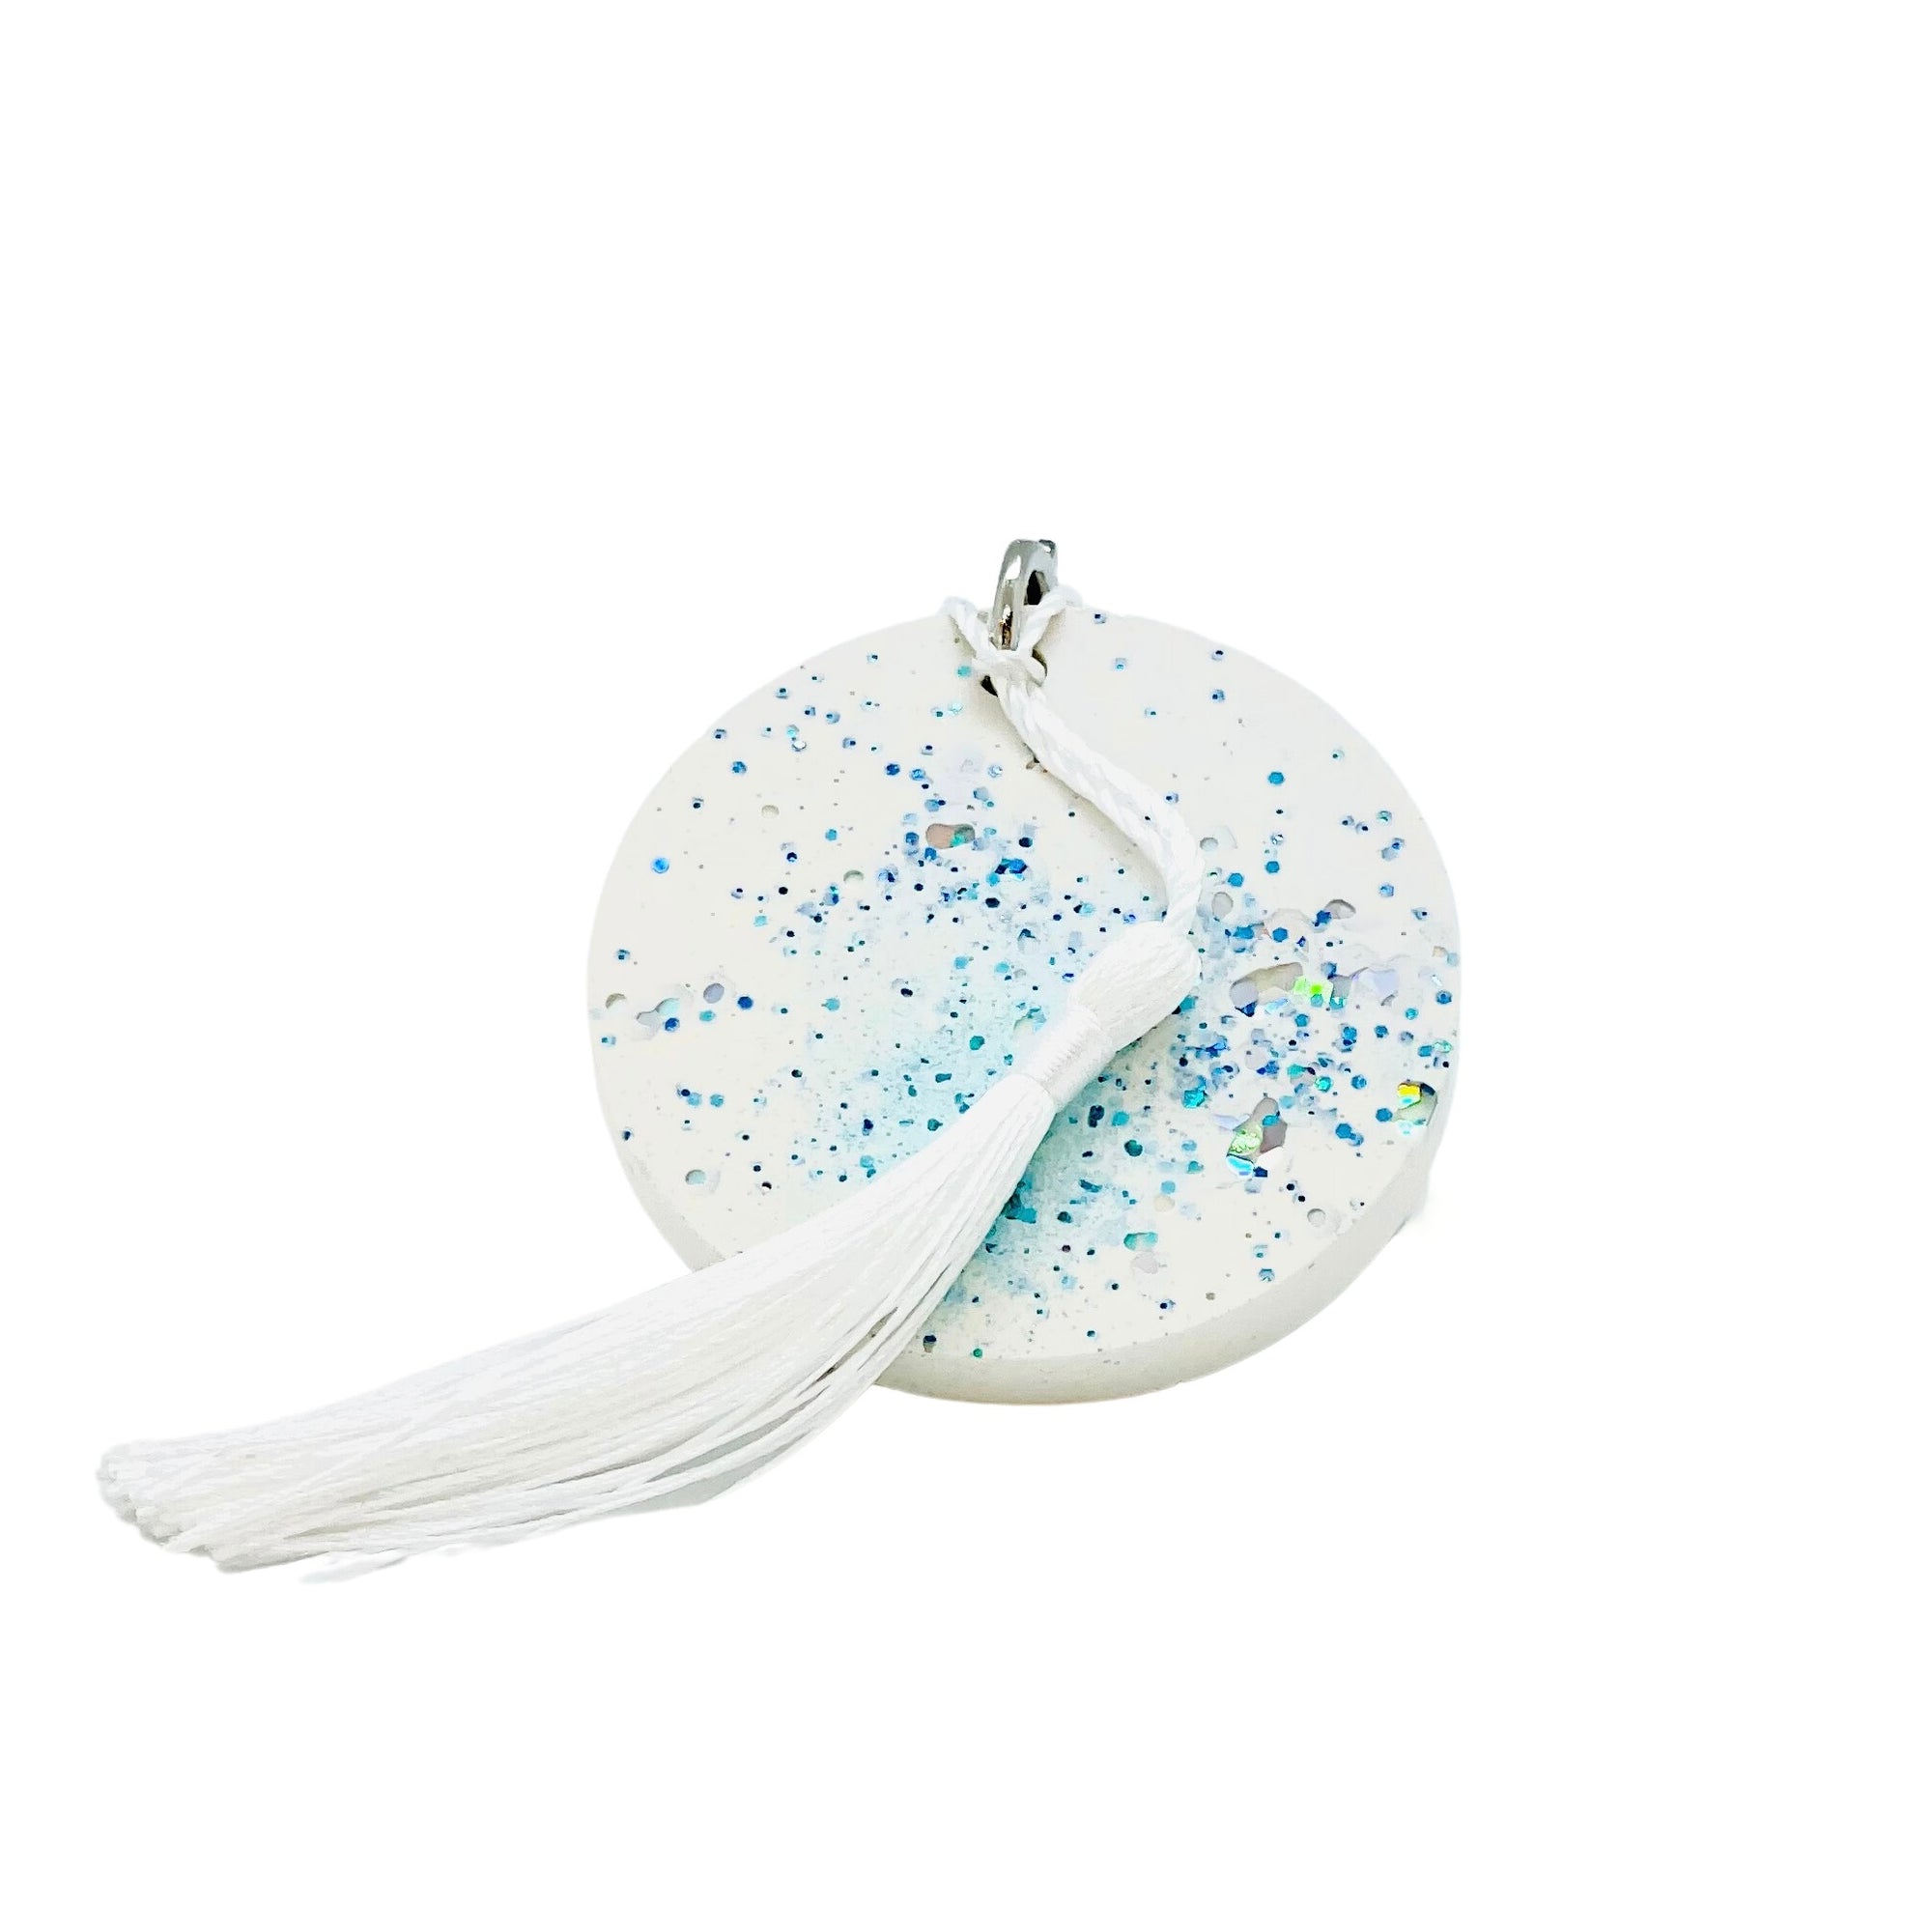 A round white Jesmonite disc keyring measuring 6cm in diameter  sprinkled with blue glitter.